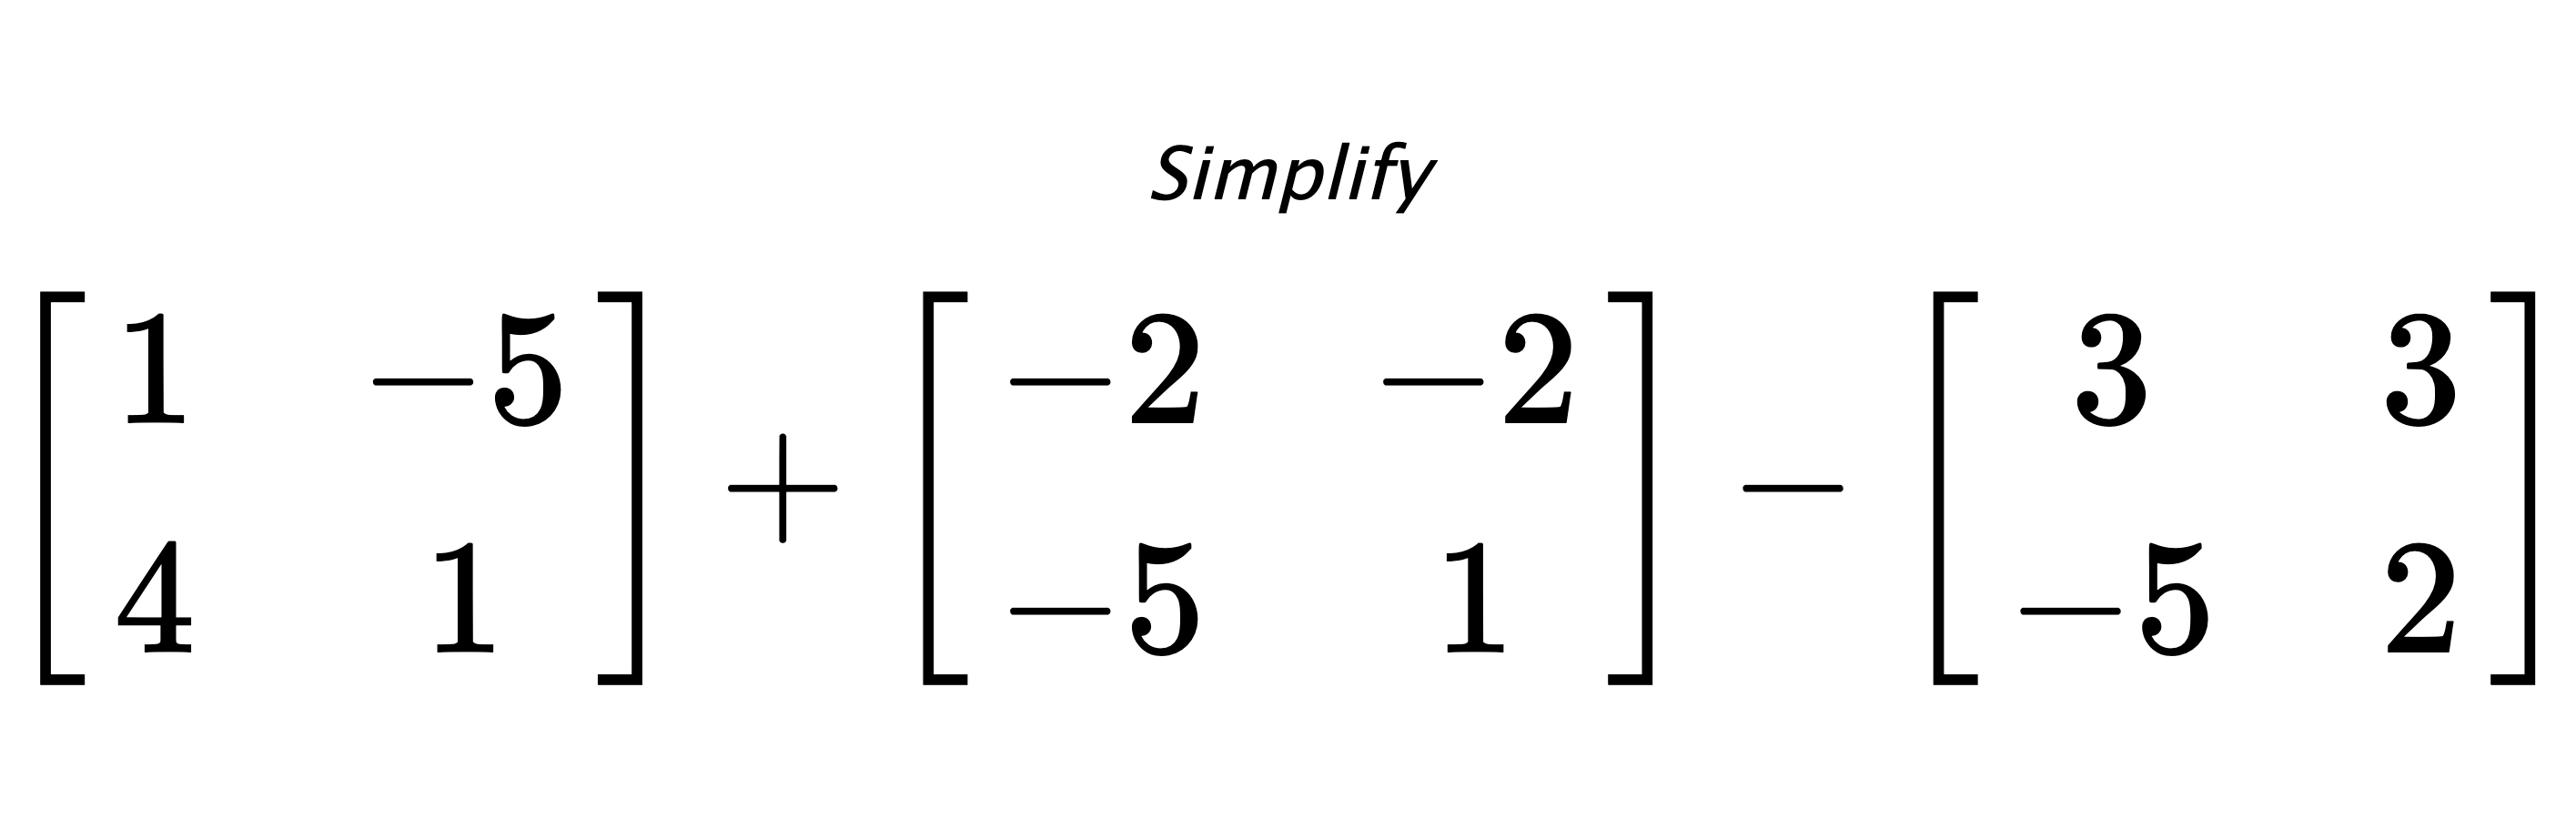 Simplify $ \begin{bmatrix} 1 & -5 \\ 4 & 1 \end{bmatrix} + \begin{bmatrix} -2 & -2 \\ -5 & 1 \end{bmatrix} - \begin{bmatrix} 3 & 3 \\ -5 & 2 \end{bmatrix} $